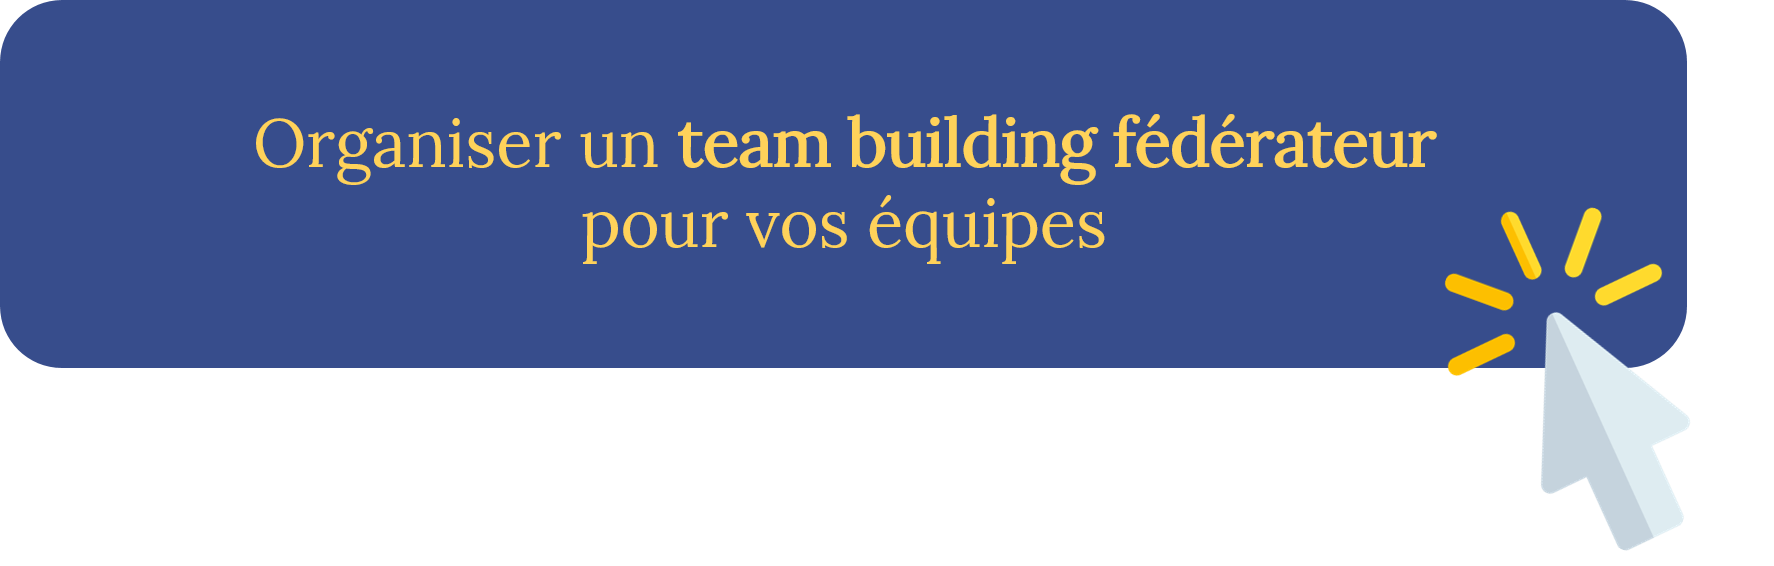 Management humaniste - team building | Blog Châteauform'